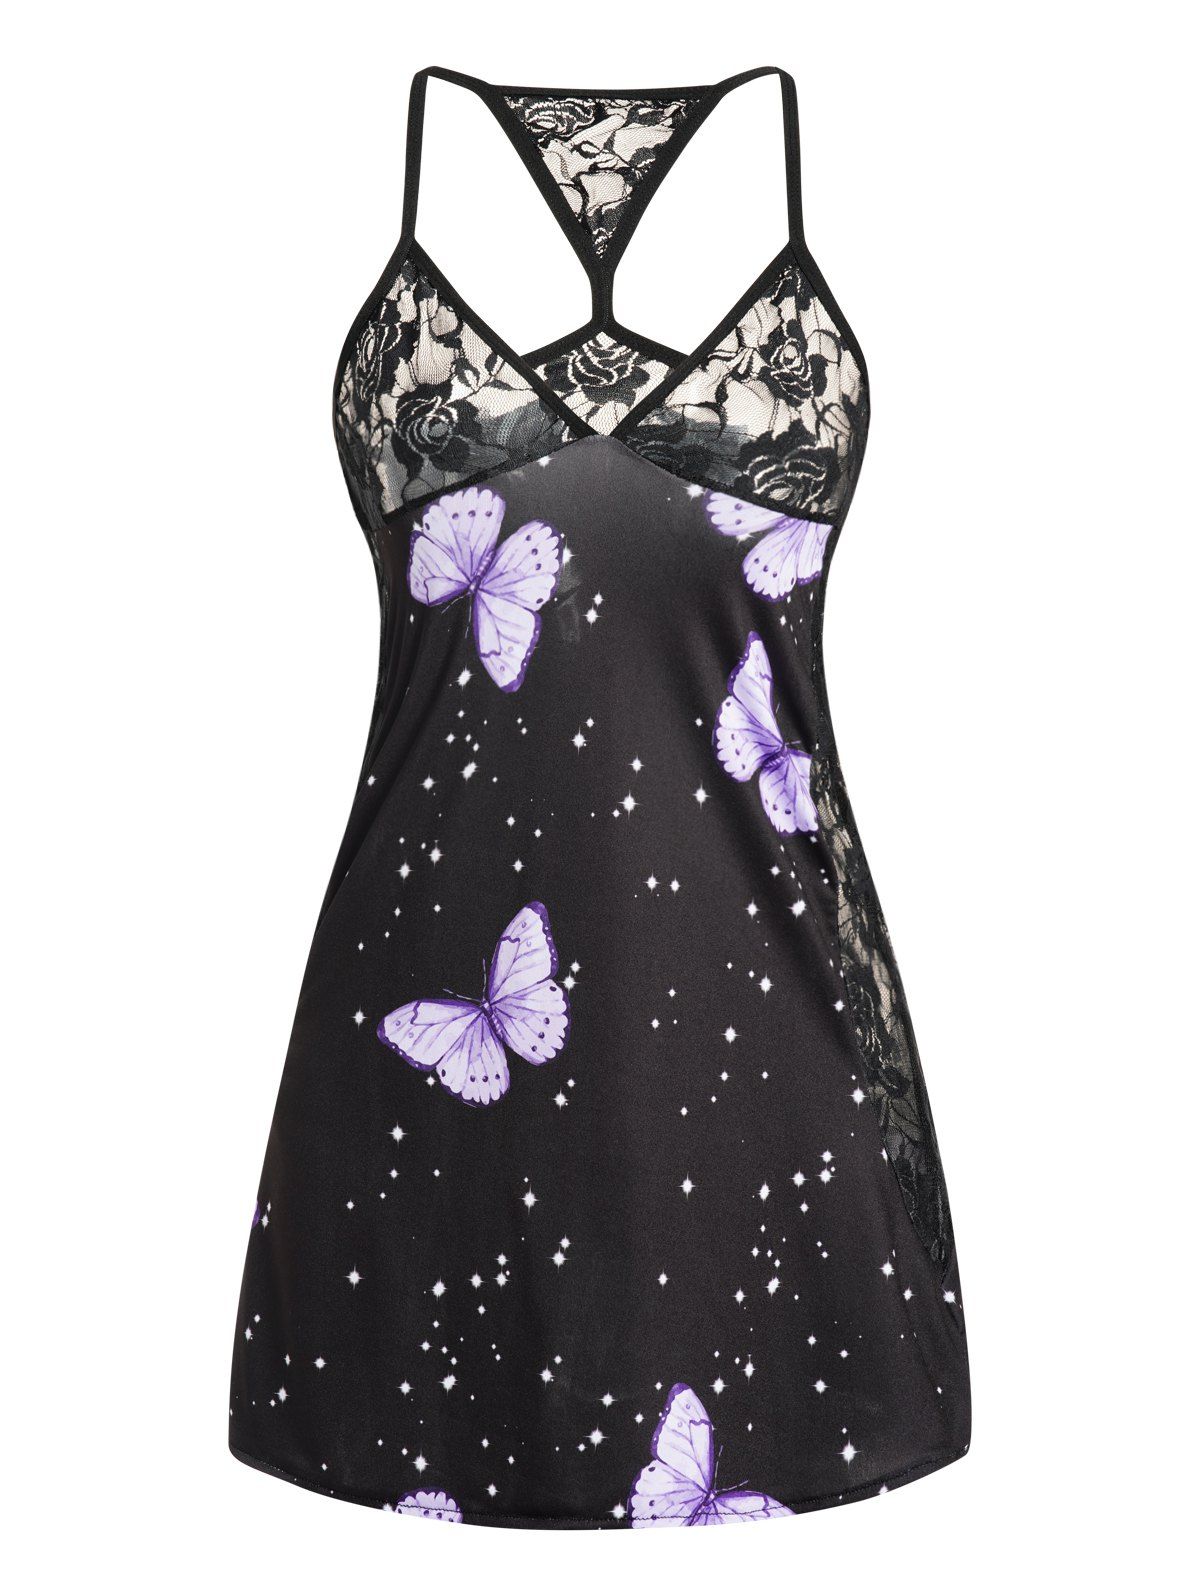 Butterfly Print See Thru Flower Lace Mini Lingerie Dress - BLACK L